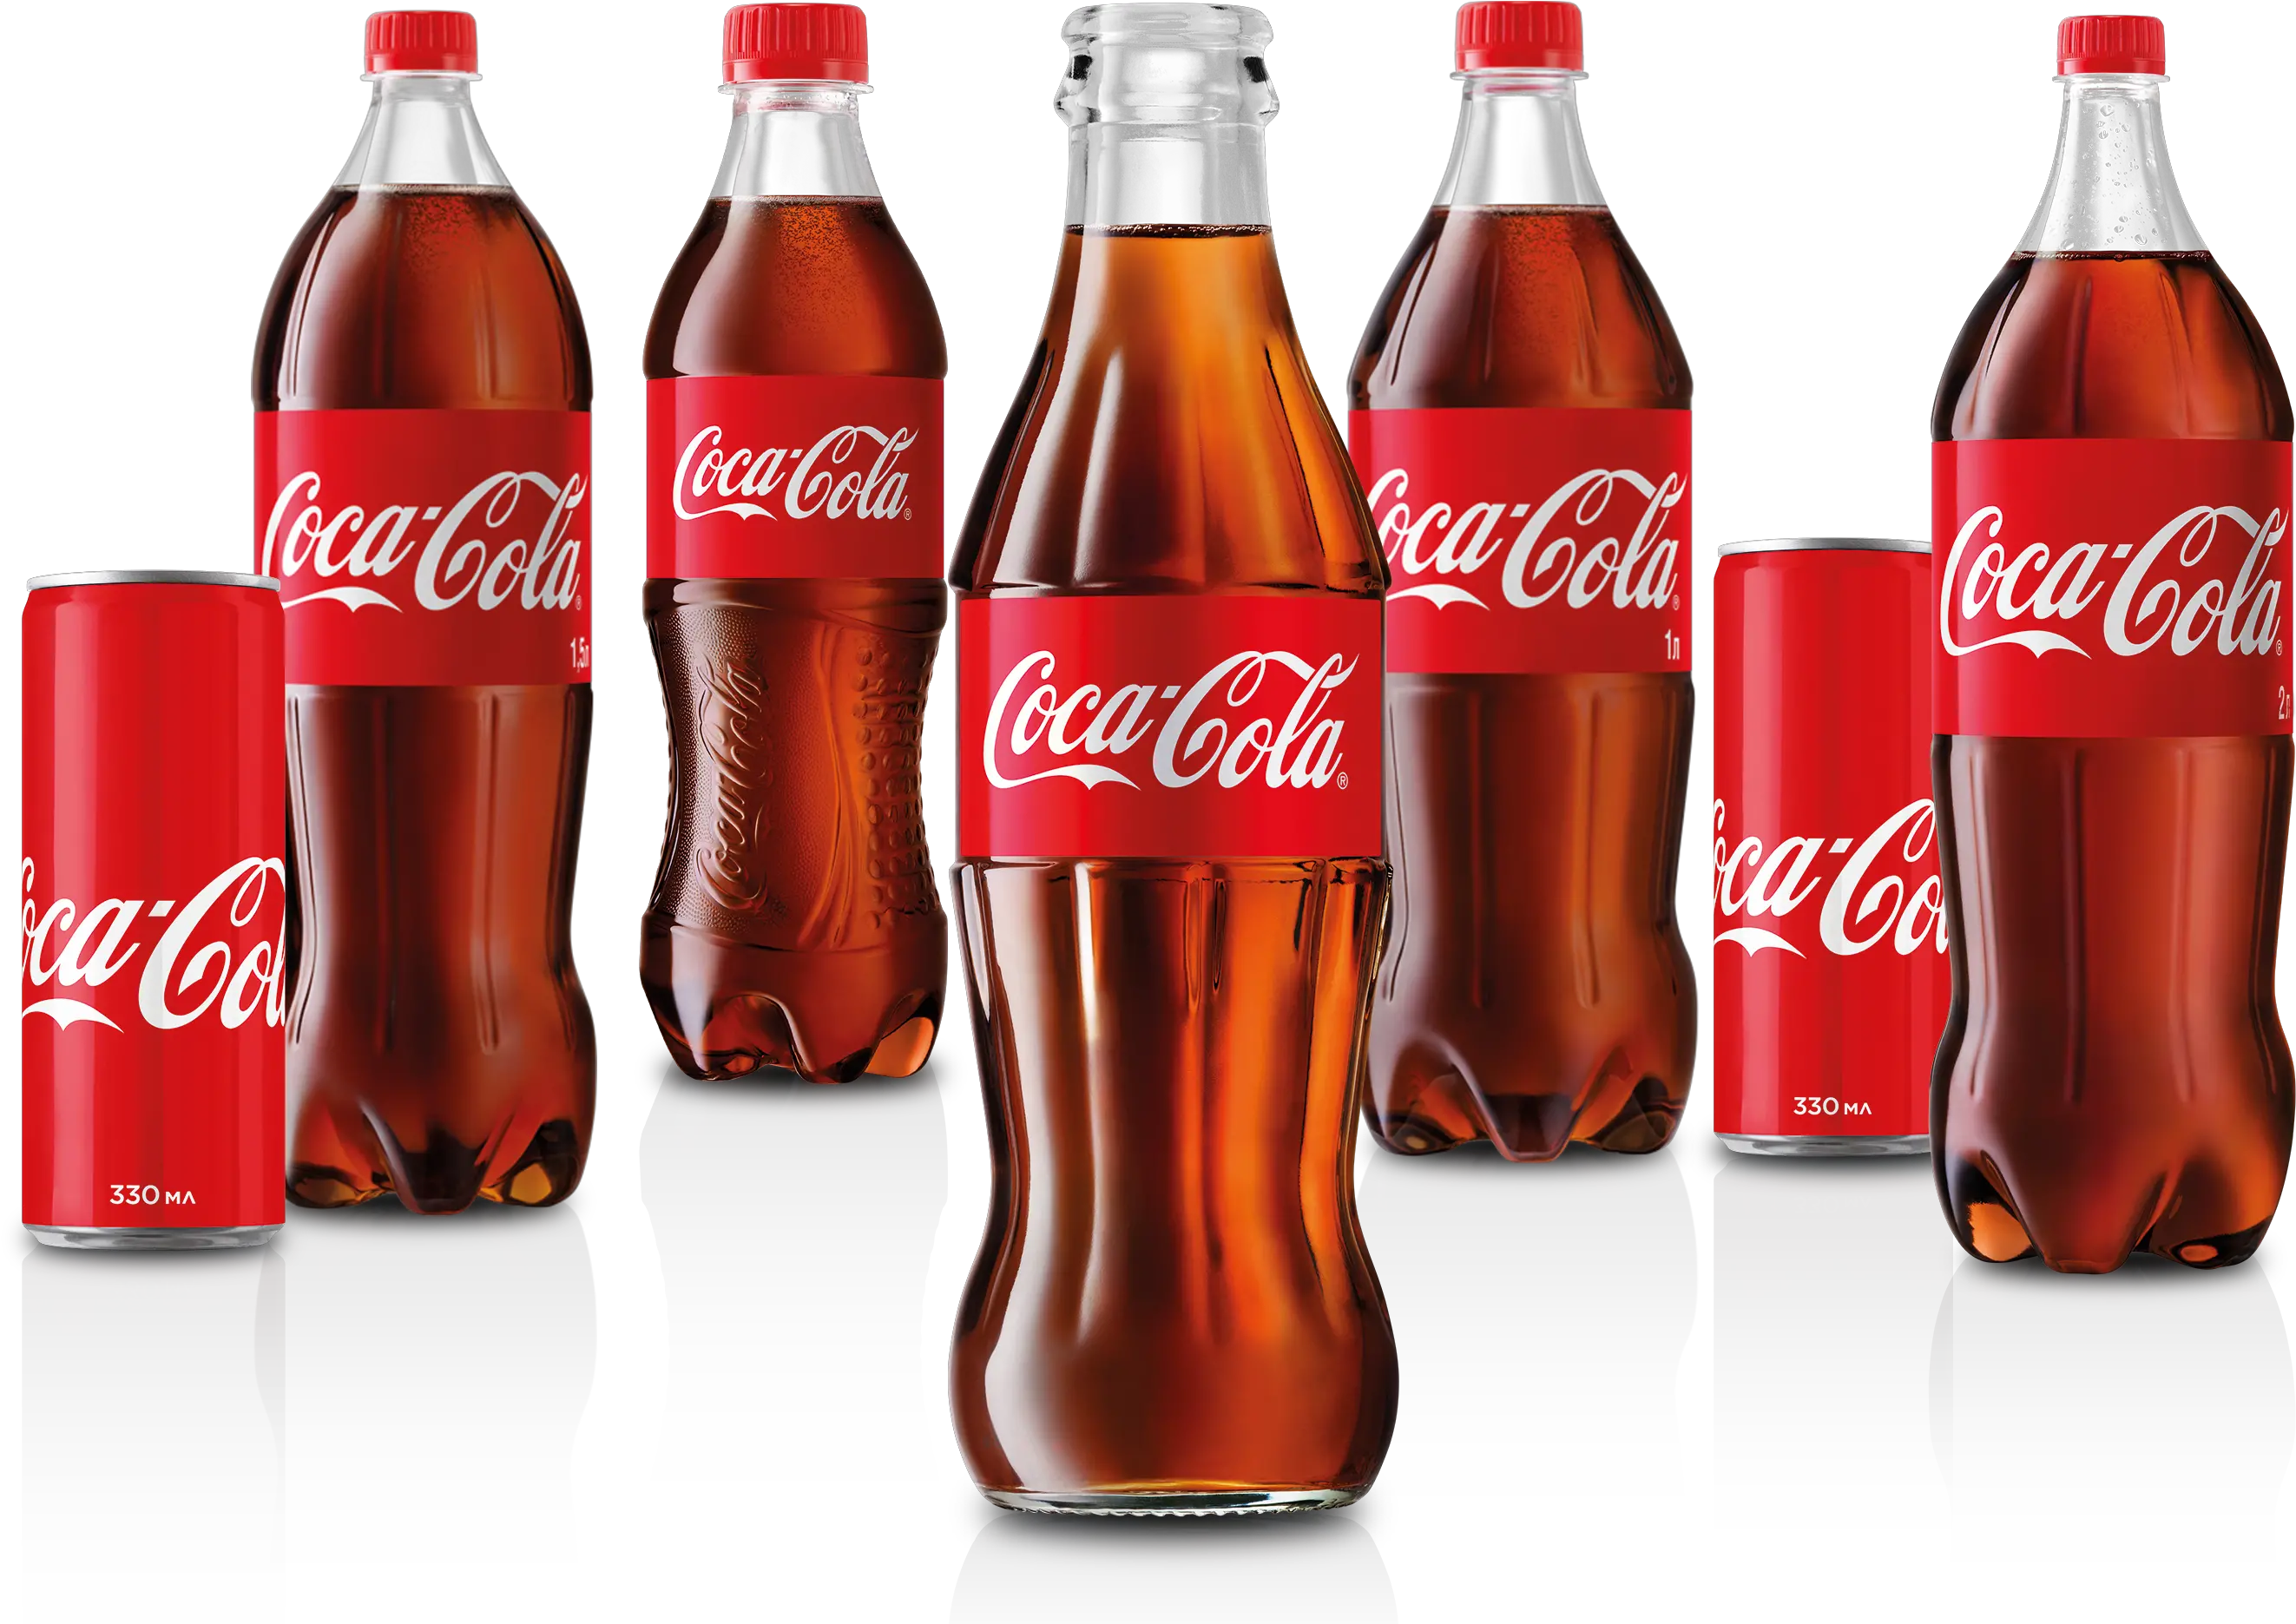 Download Coca Coca Cola Bottle Image Png Coca Cola Bottle Png